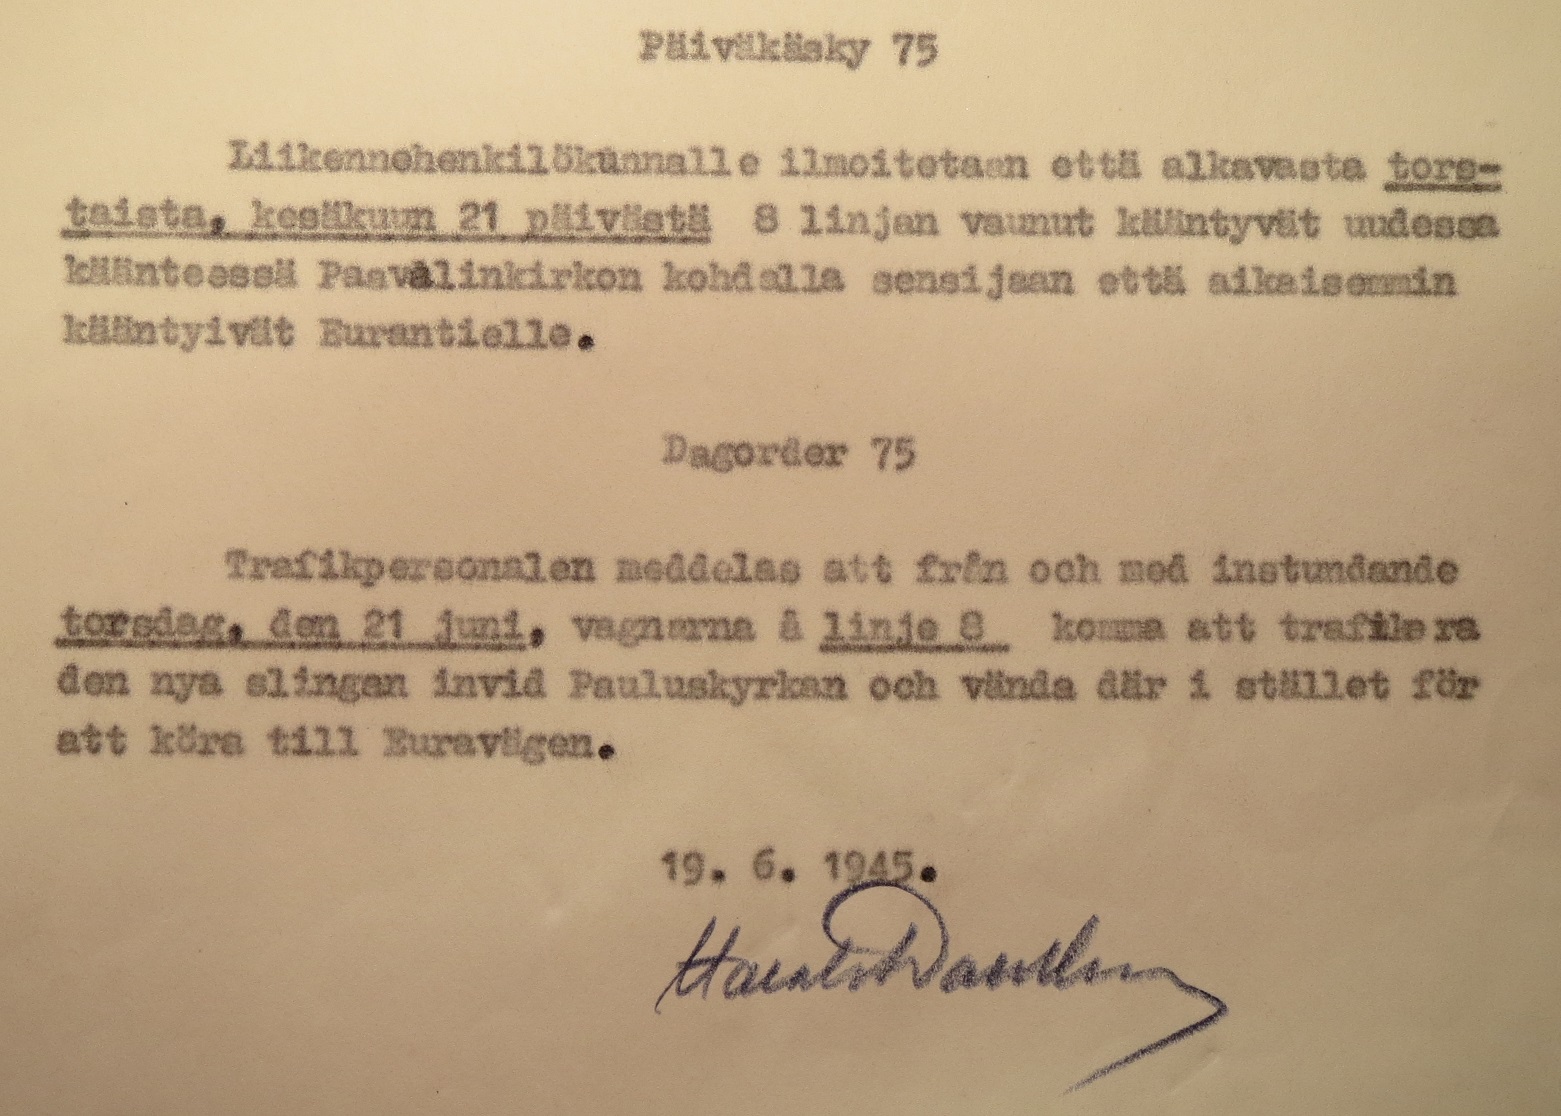 HKL:n päiväkäsky 75/1945